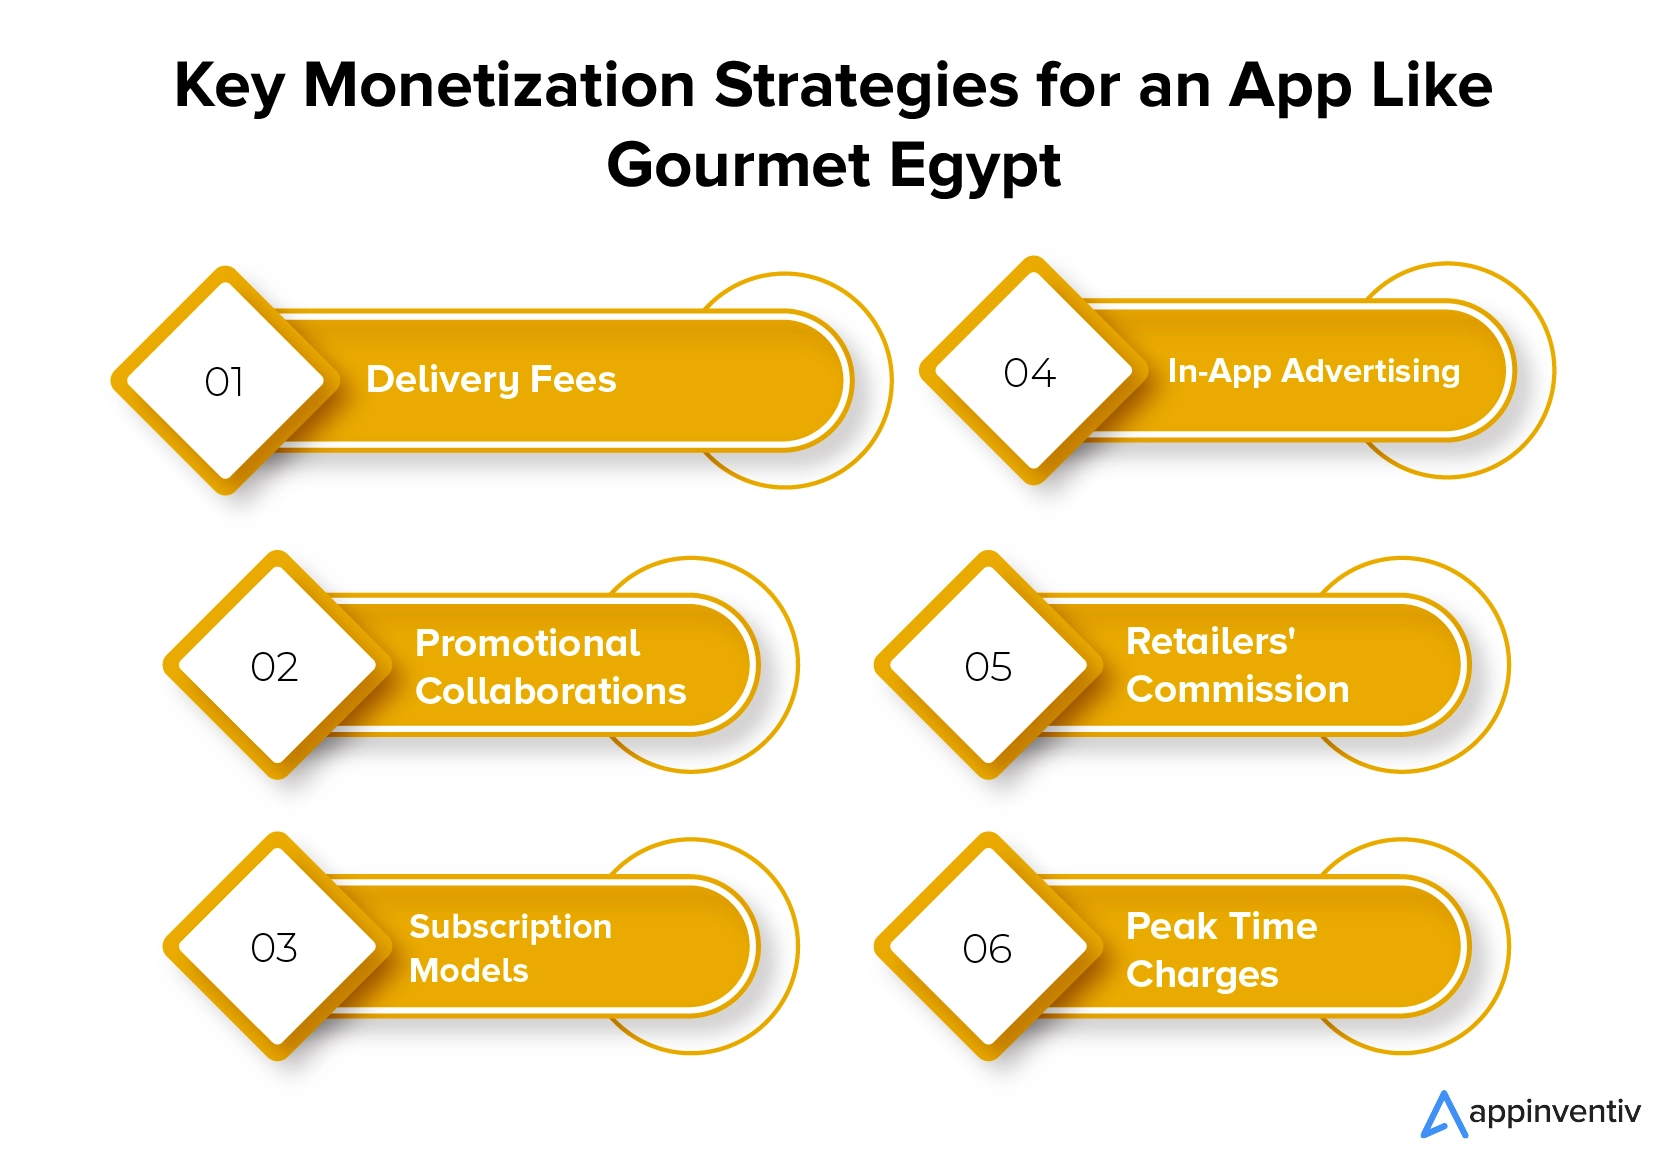 Gourmet Egypt와 같은 앱의 주요 수익 창출 전략